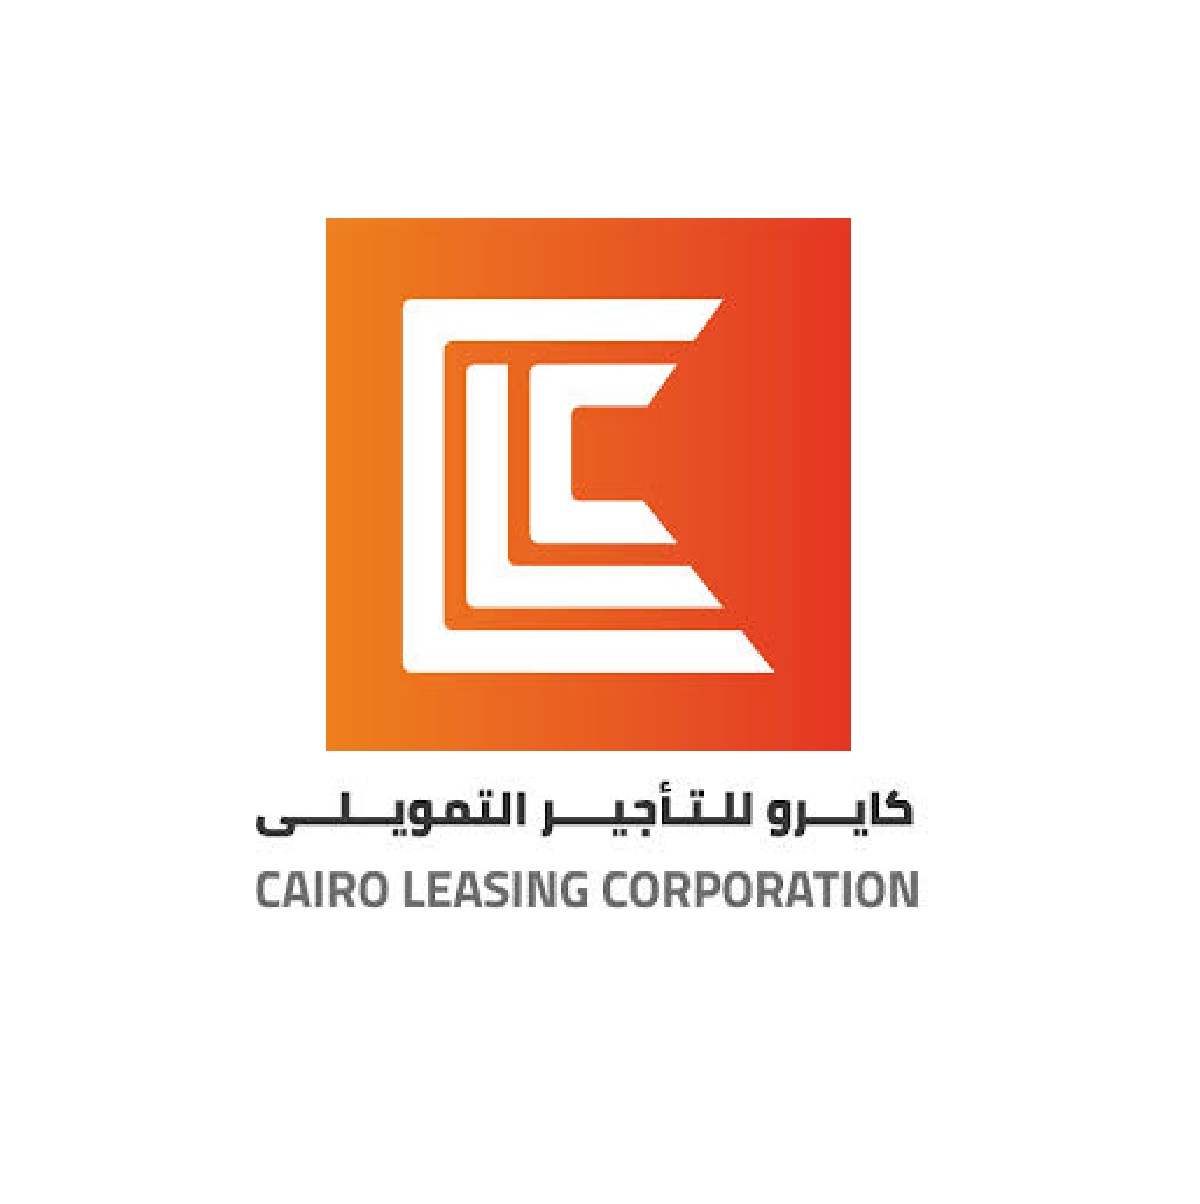 Cairo Leasing Corporation